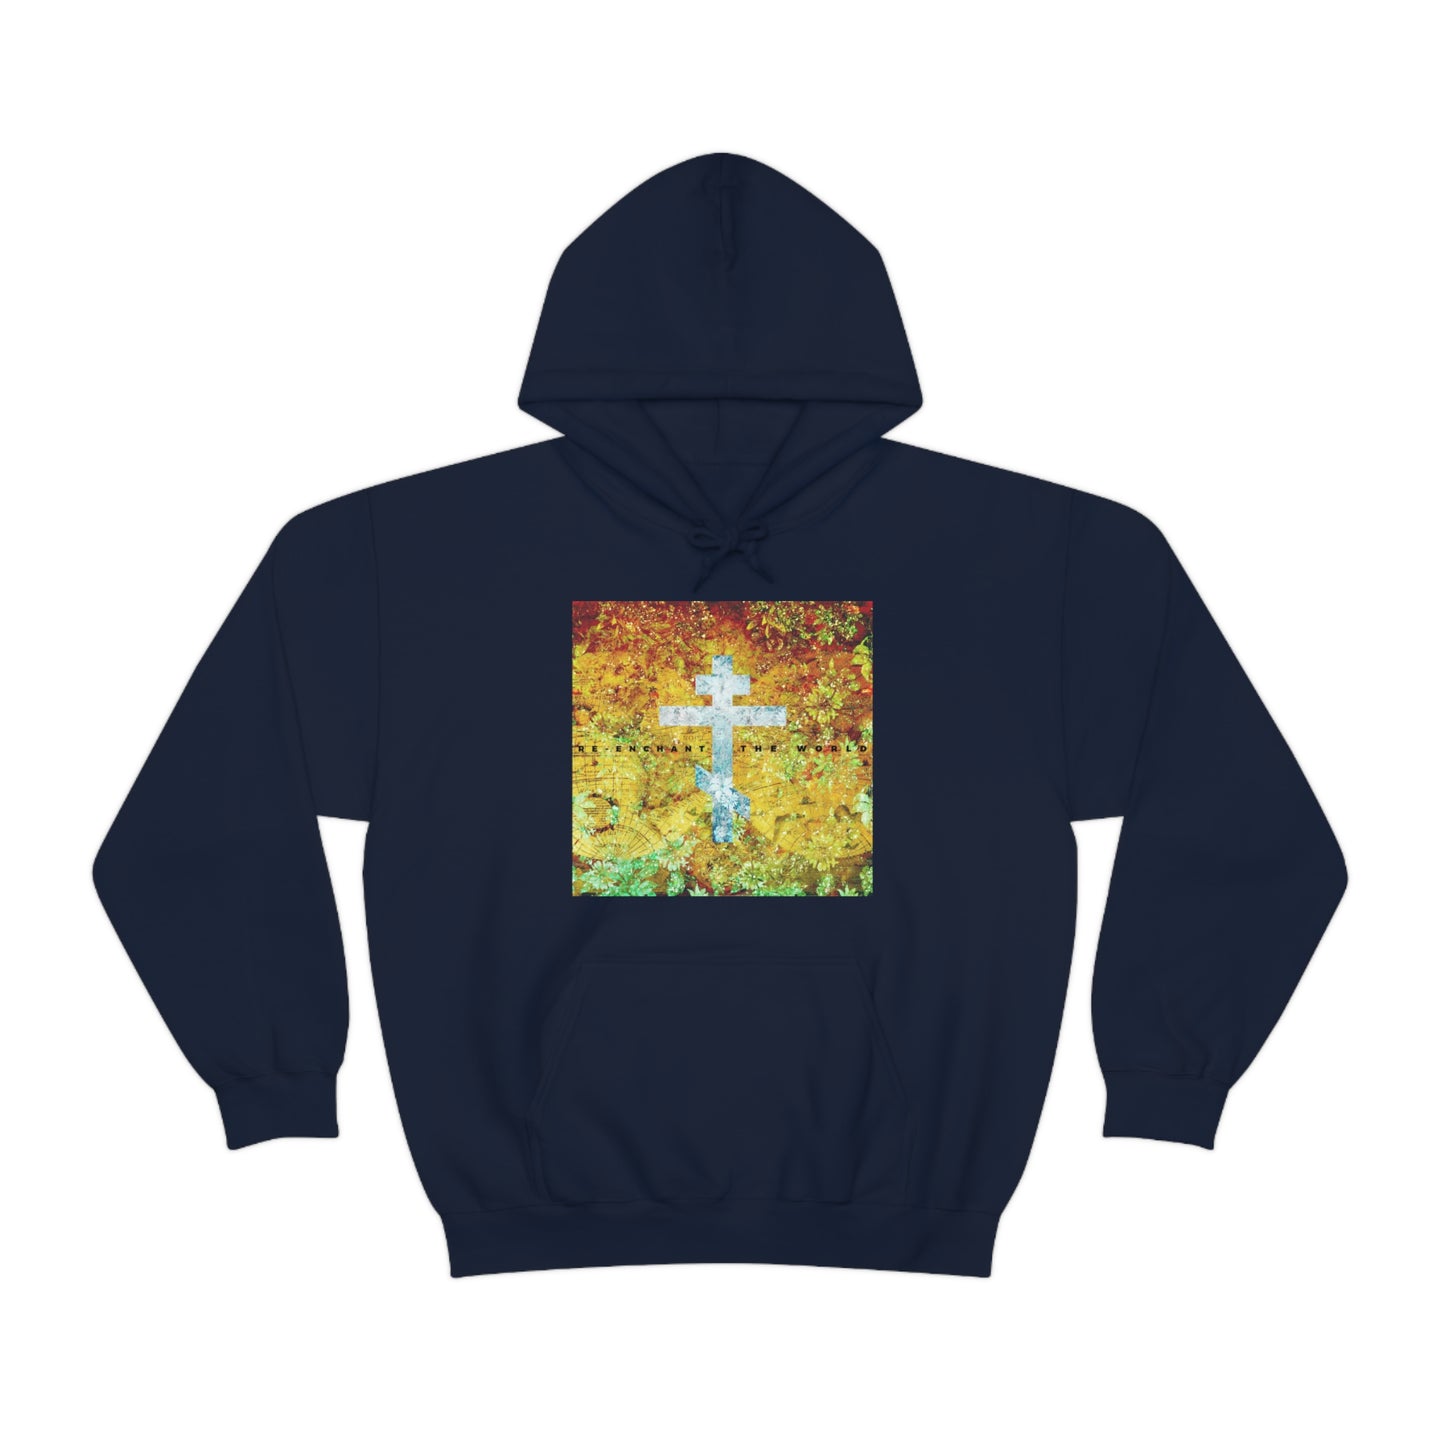 Re-Enchant the World No. 5 | Orthodox Christian Hoodie / Hooded Sweatshirt